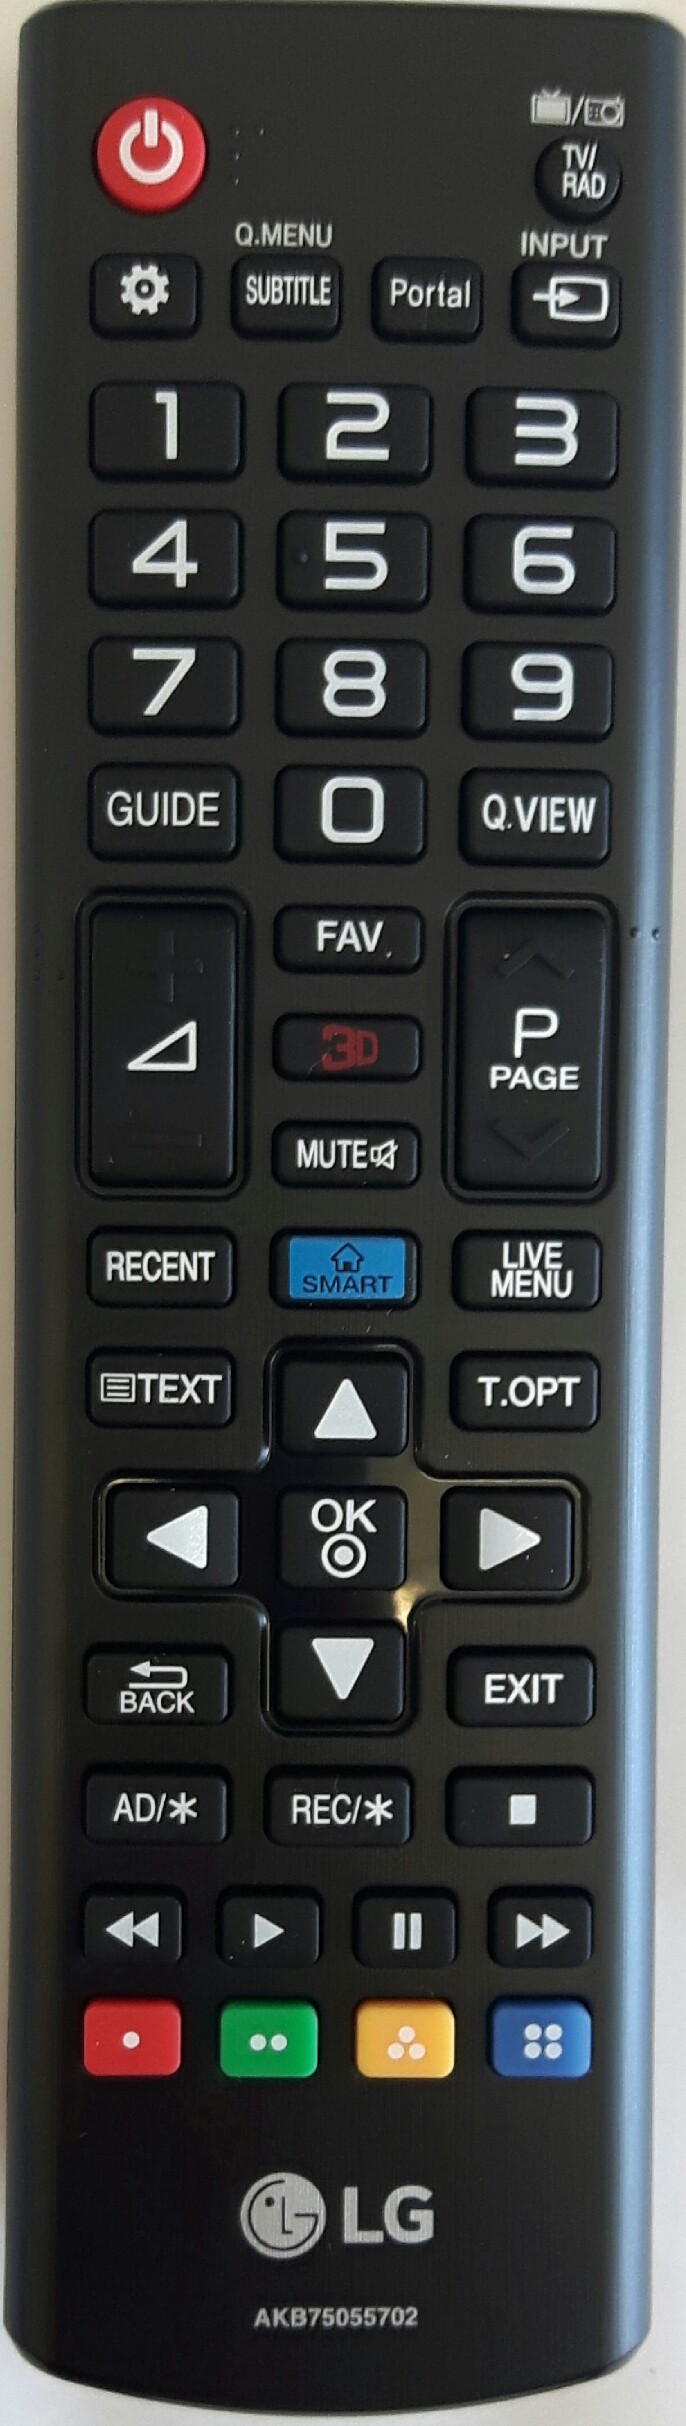 LG AKB73715679 Remote Control Original